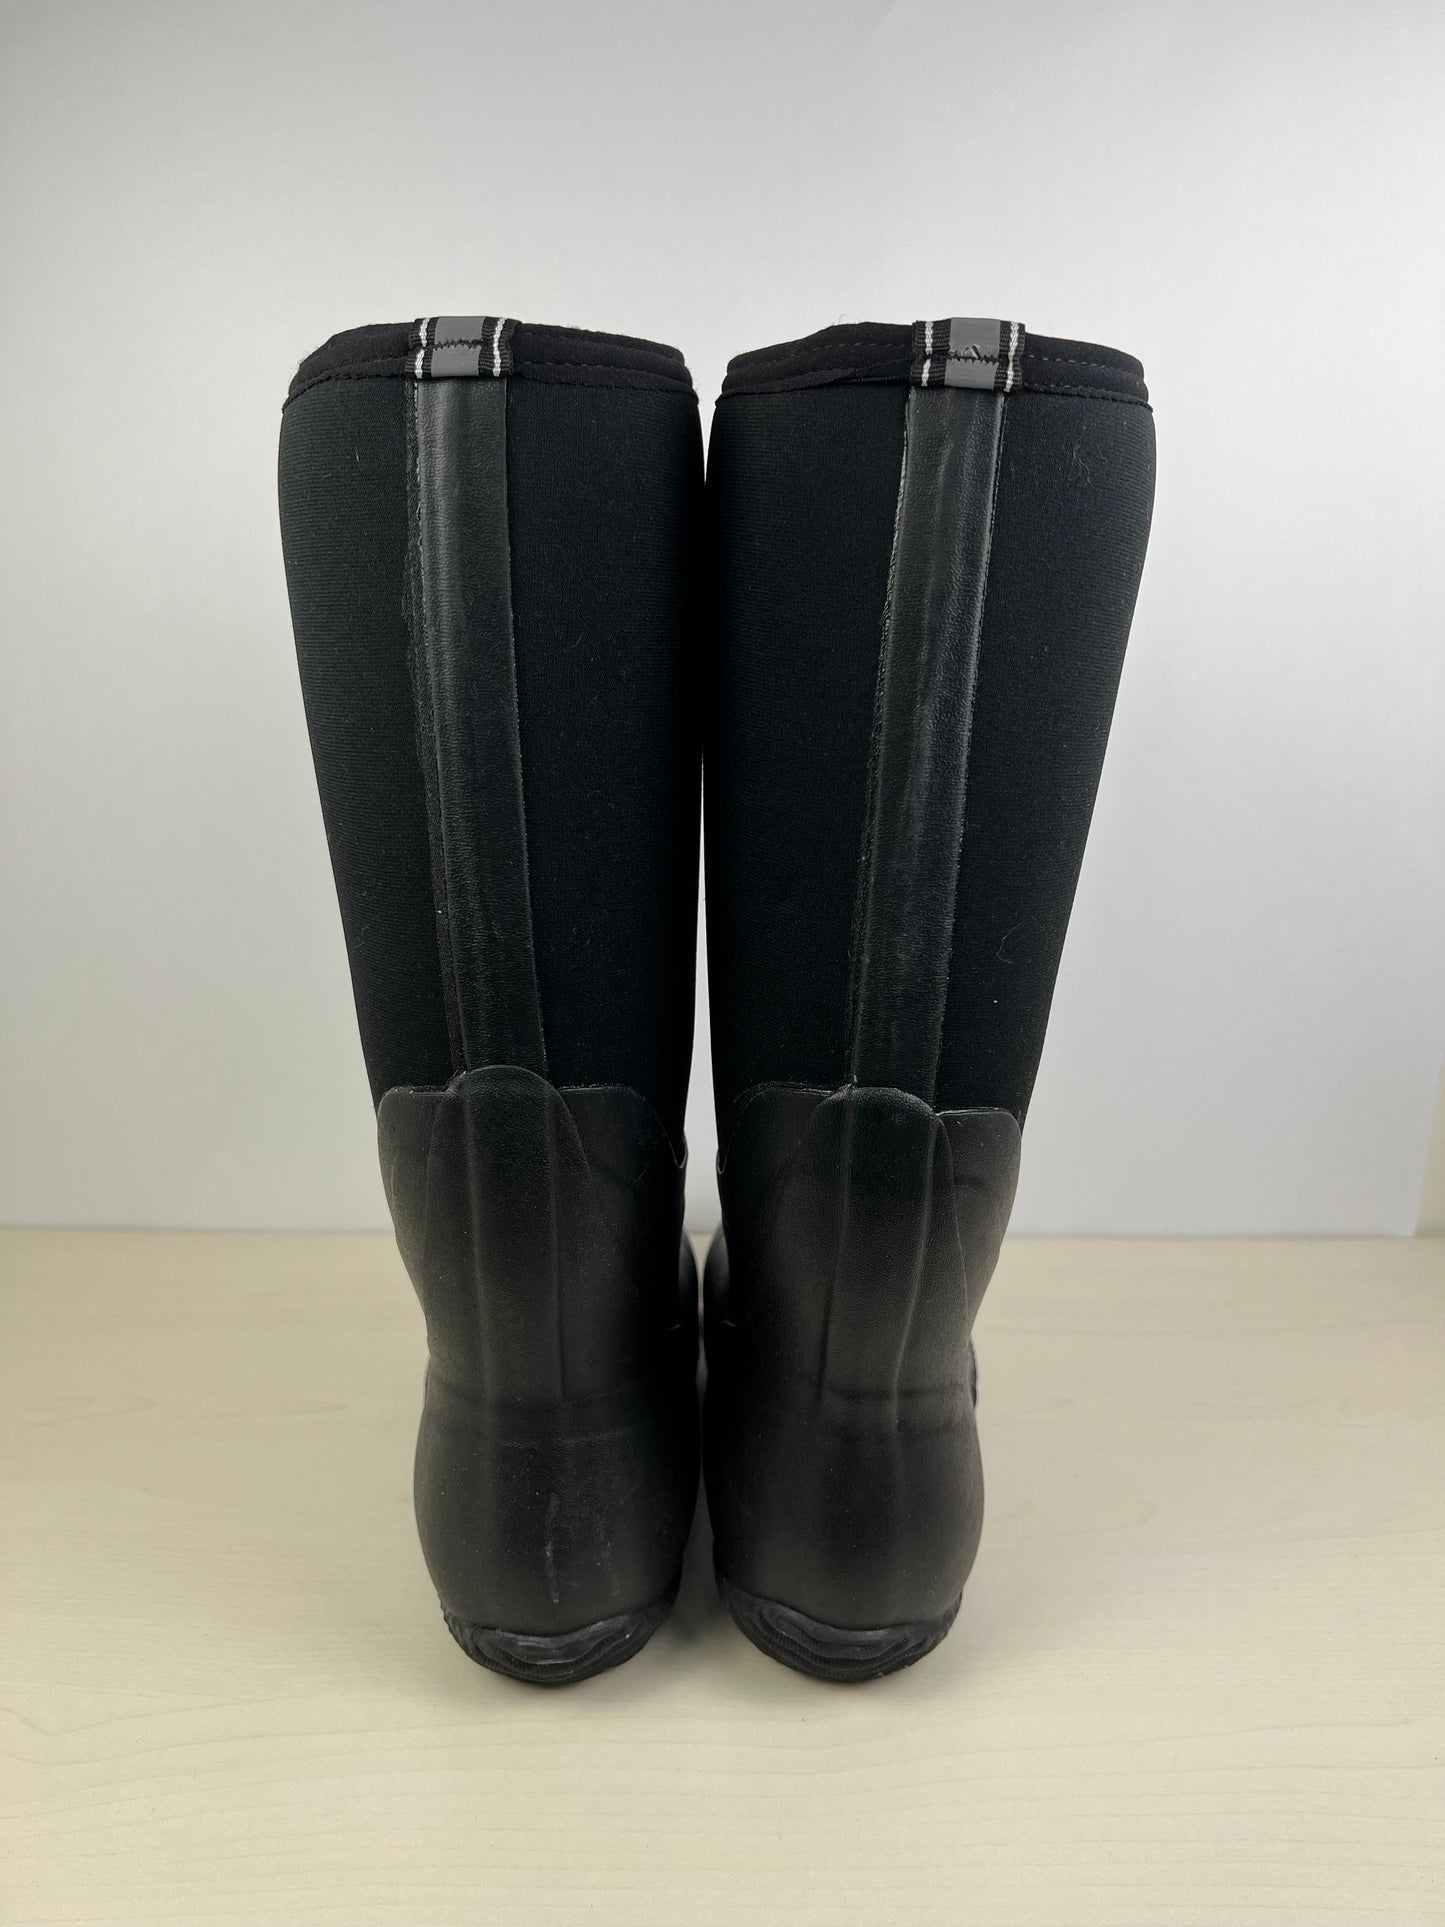 Boots Rain By Hisea  Size: 6